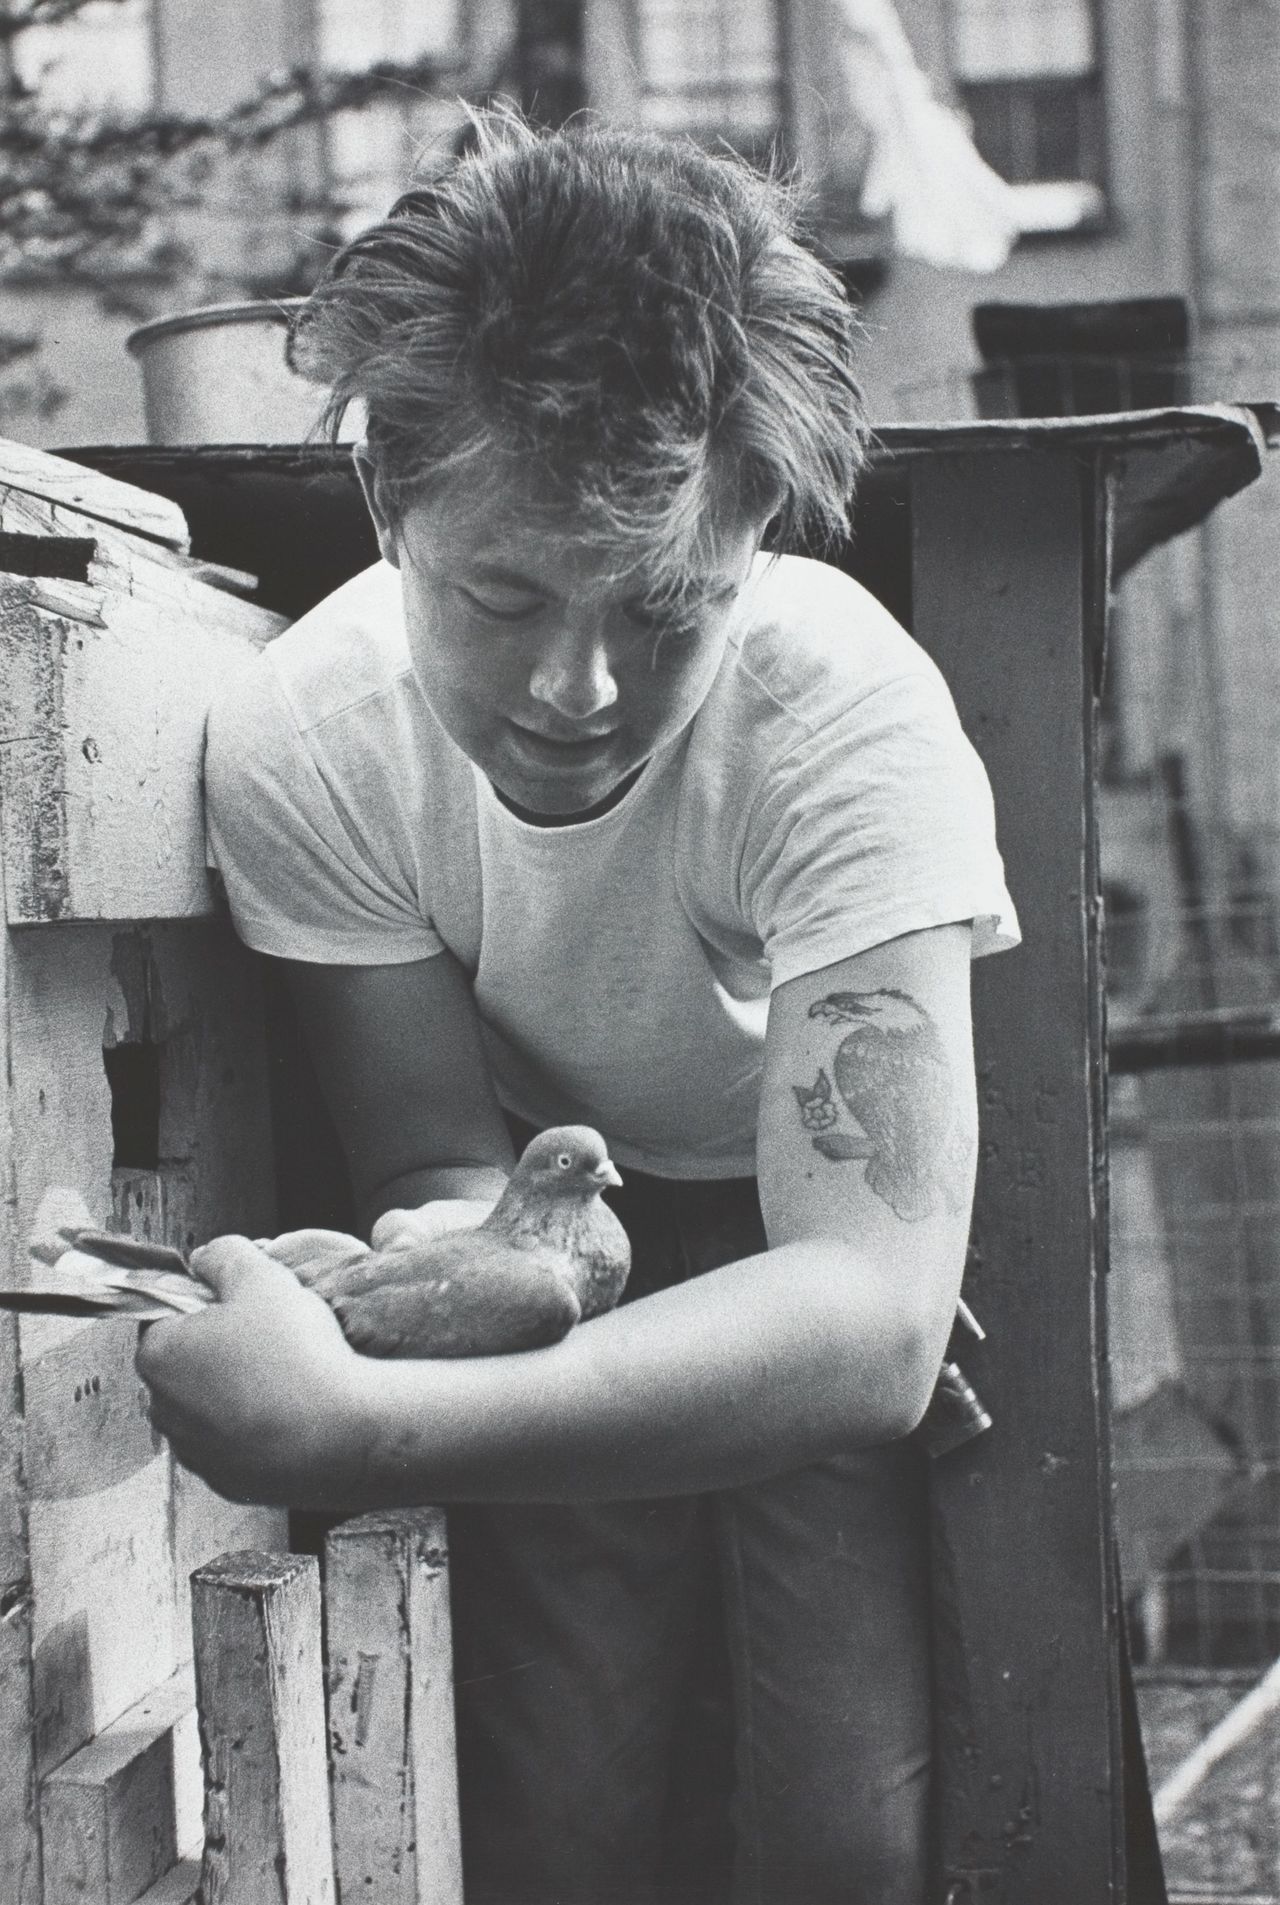 oldnewyorklandia:
“ Bruce Davidson. Boy with Pigeon (Brooklyn Gang series), 1959.
”